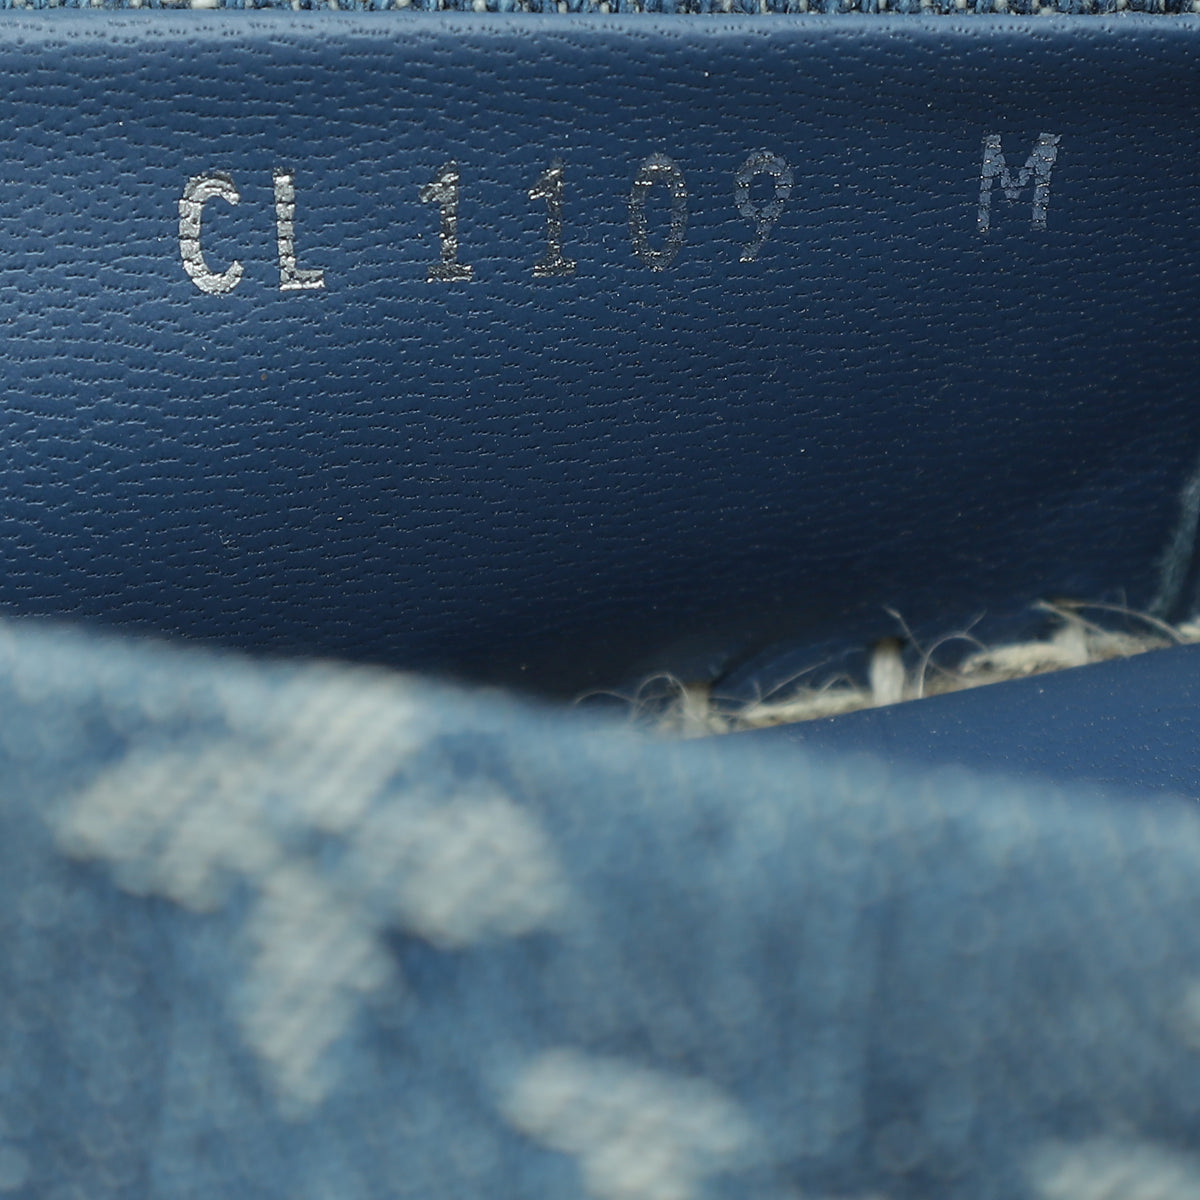 Louis Vuitton Blue Monogram Denim Starboard Espadrille Flats 38 – The Closet